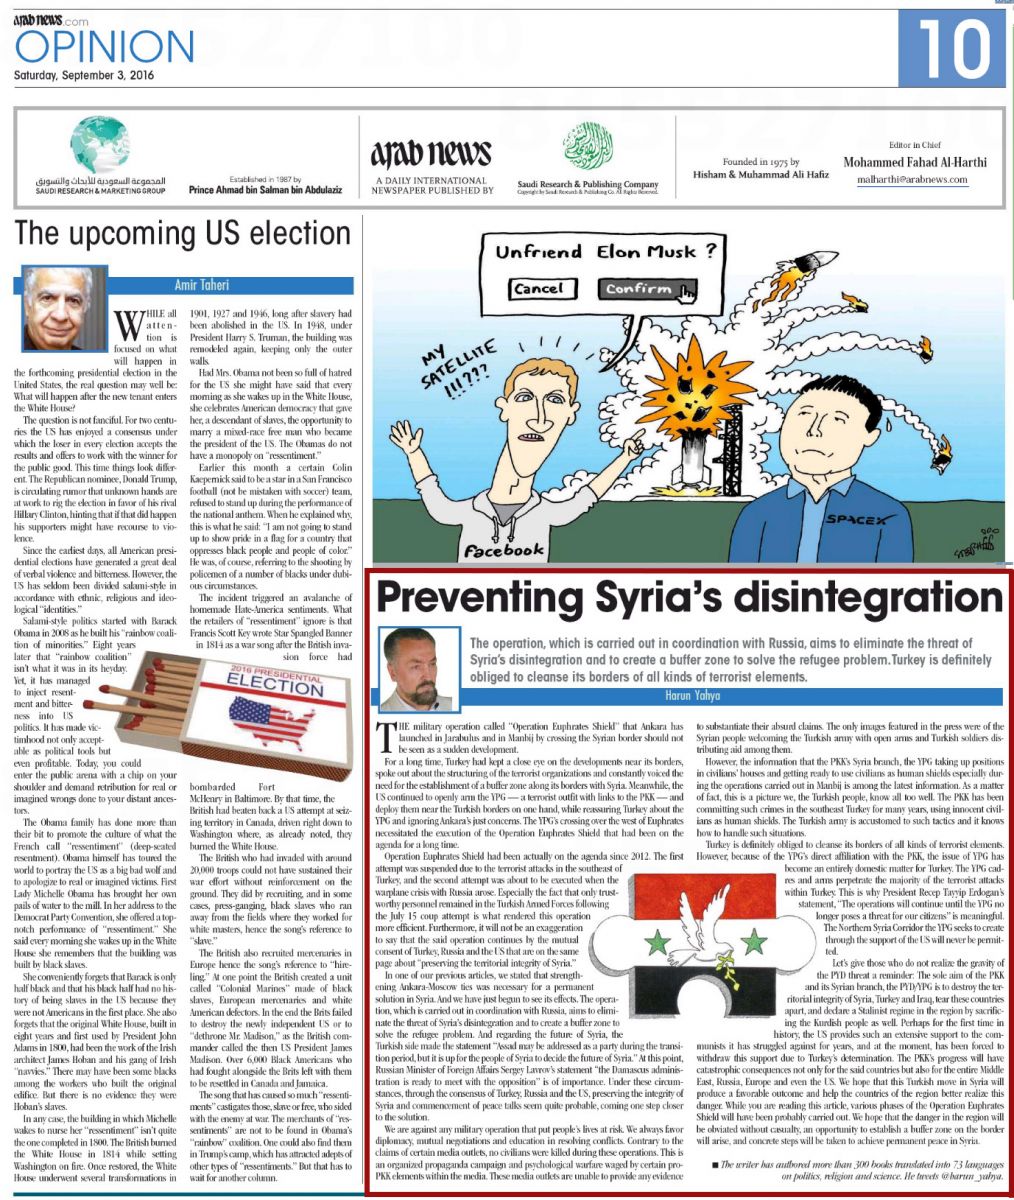 Preventing Syria’s disintegration